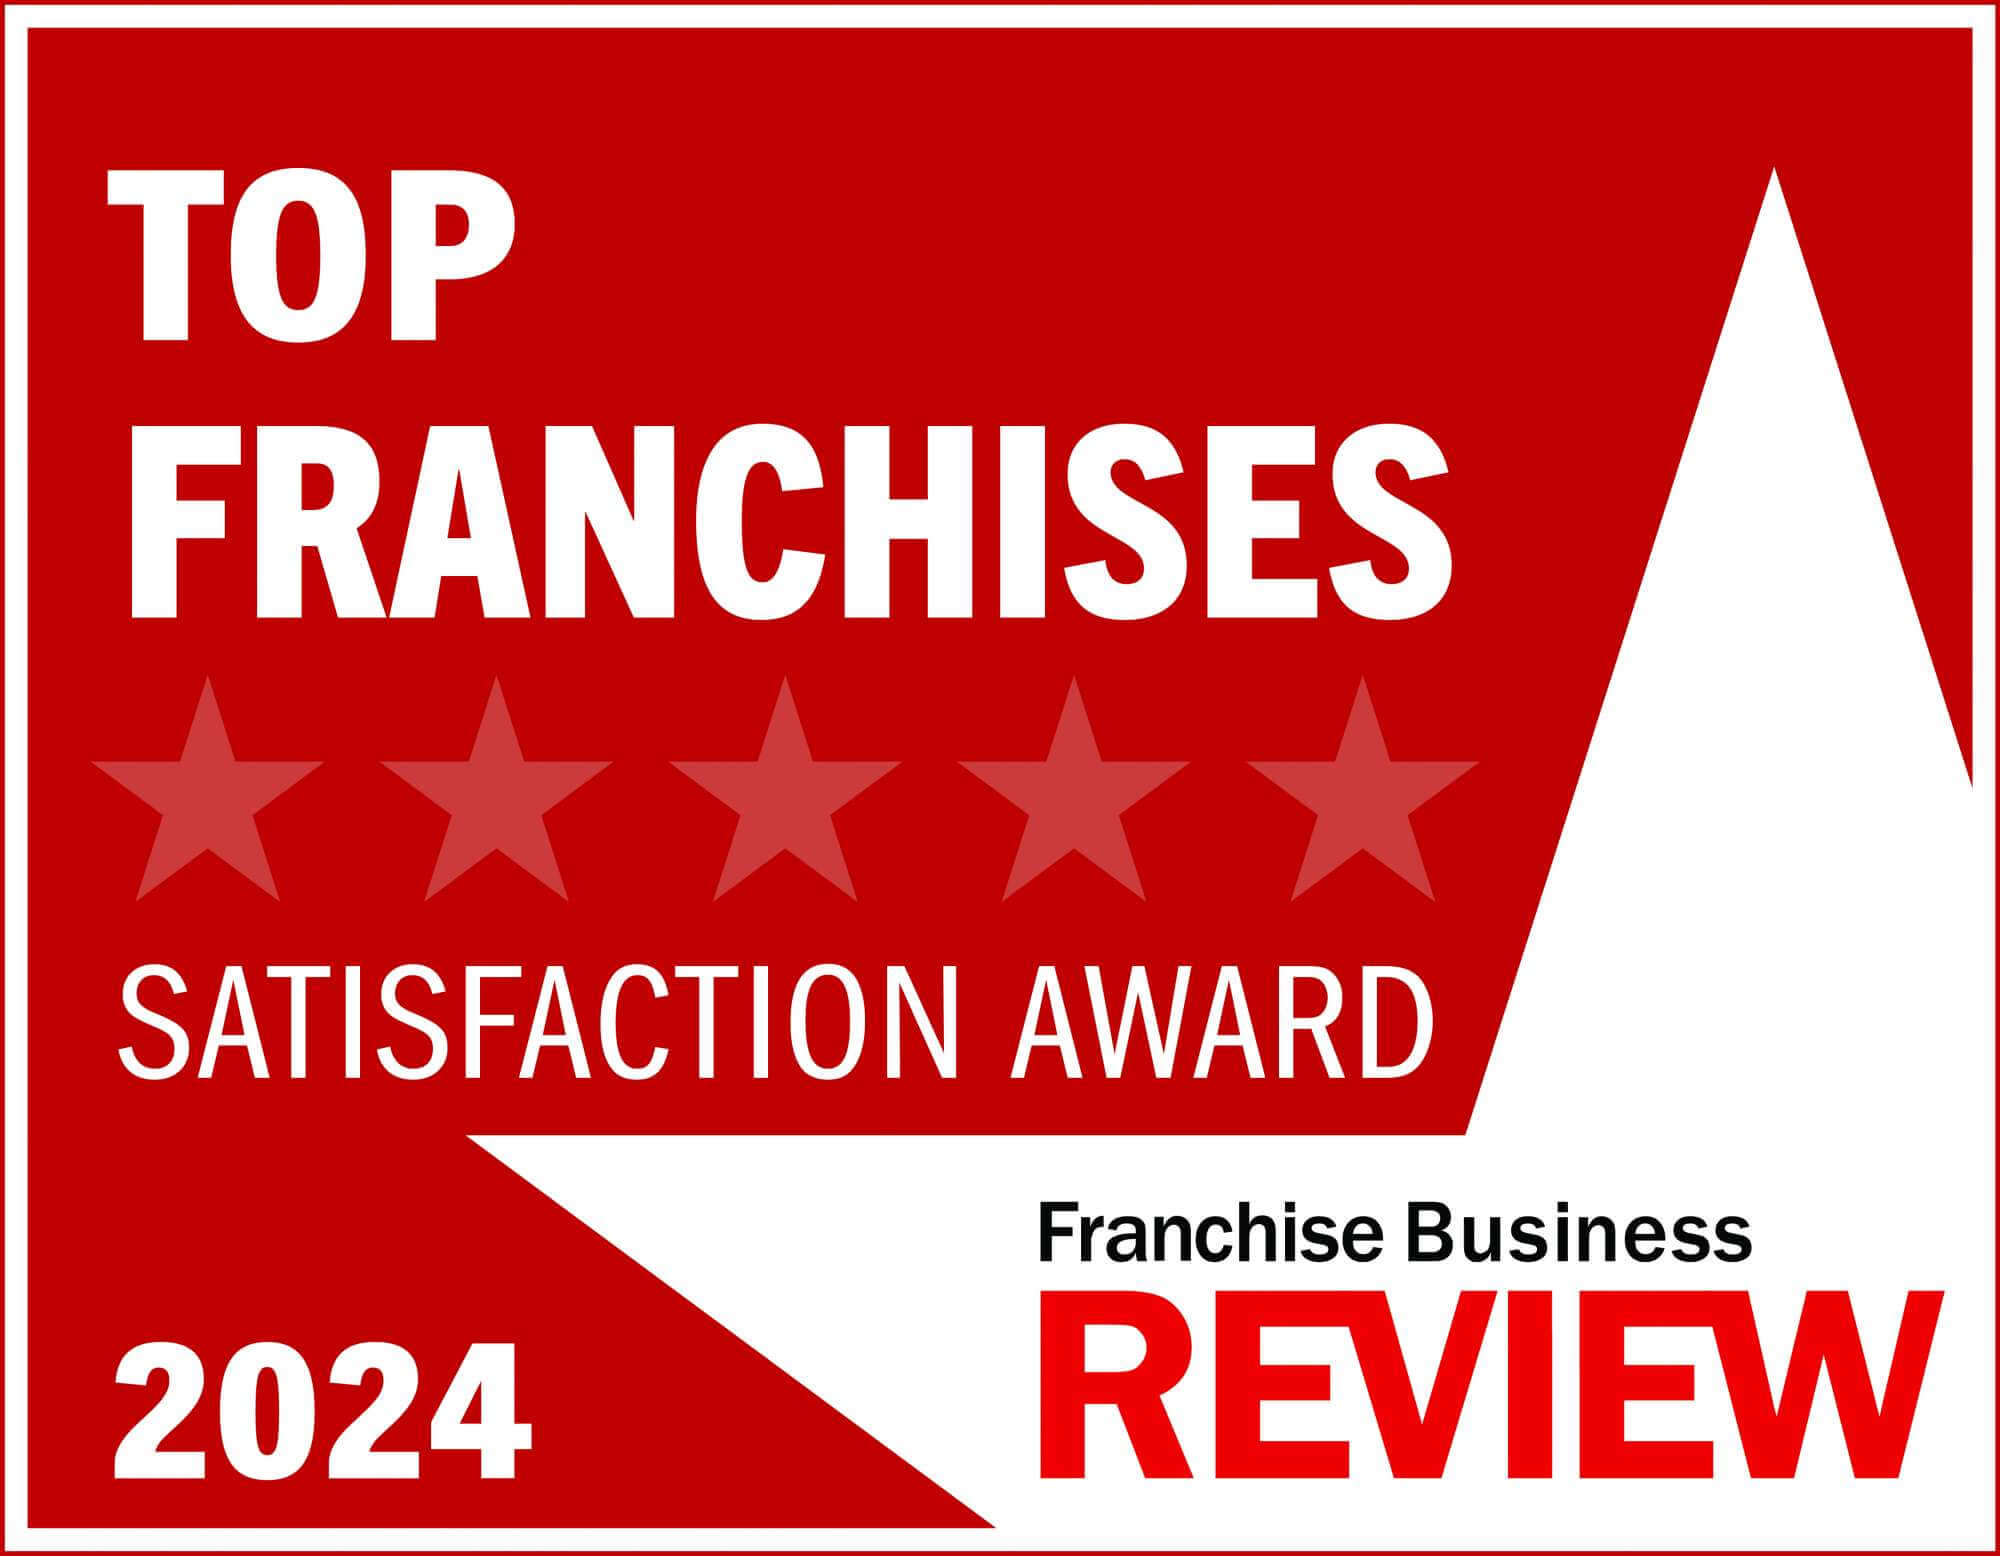 Franchise Business Review Top Franchises  - 2024